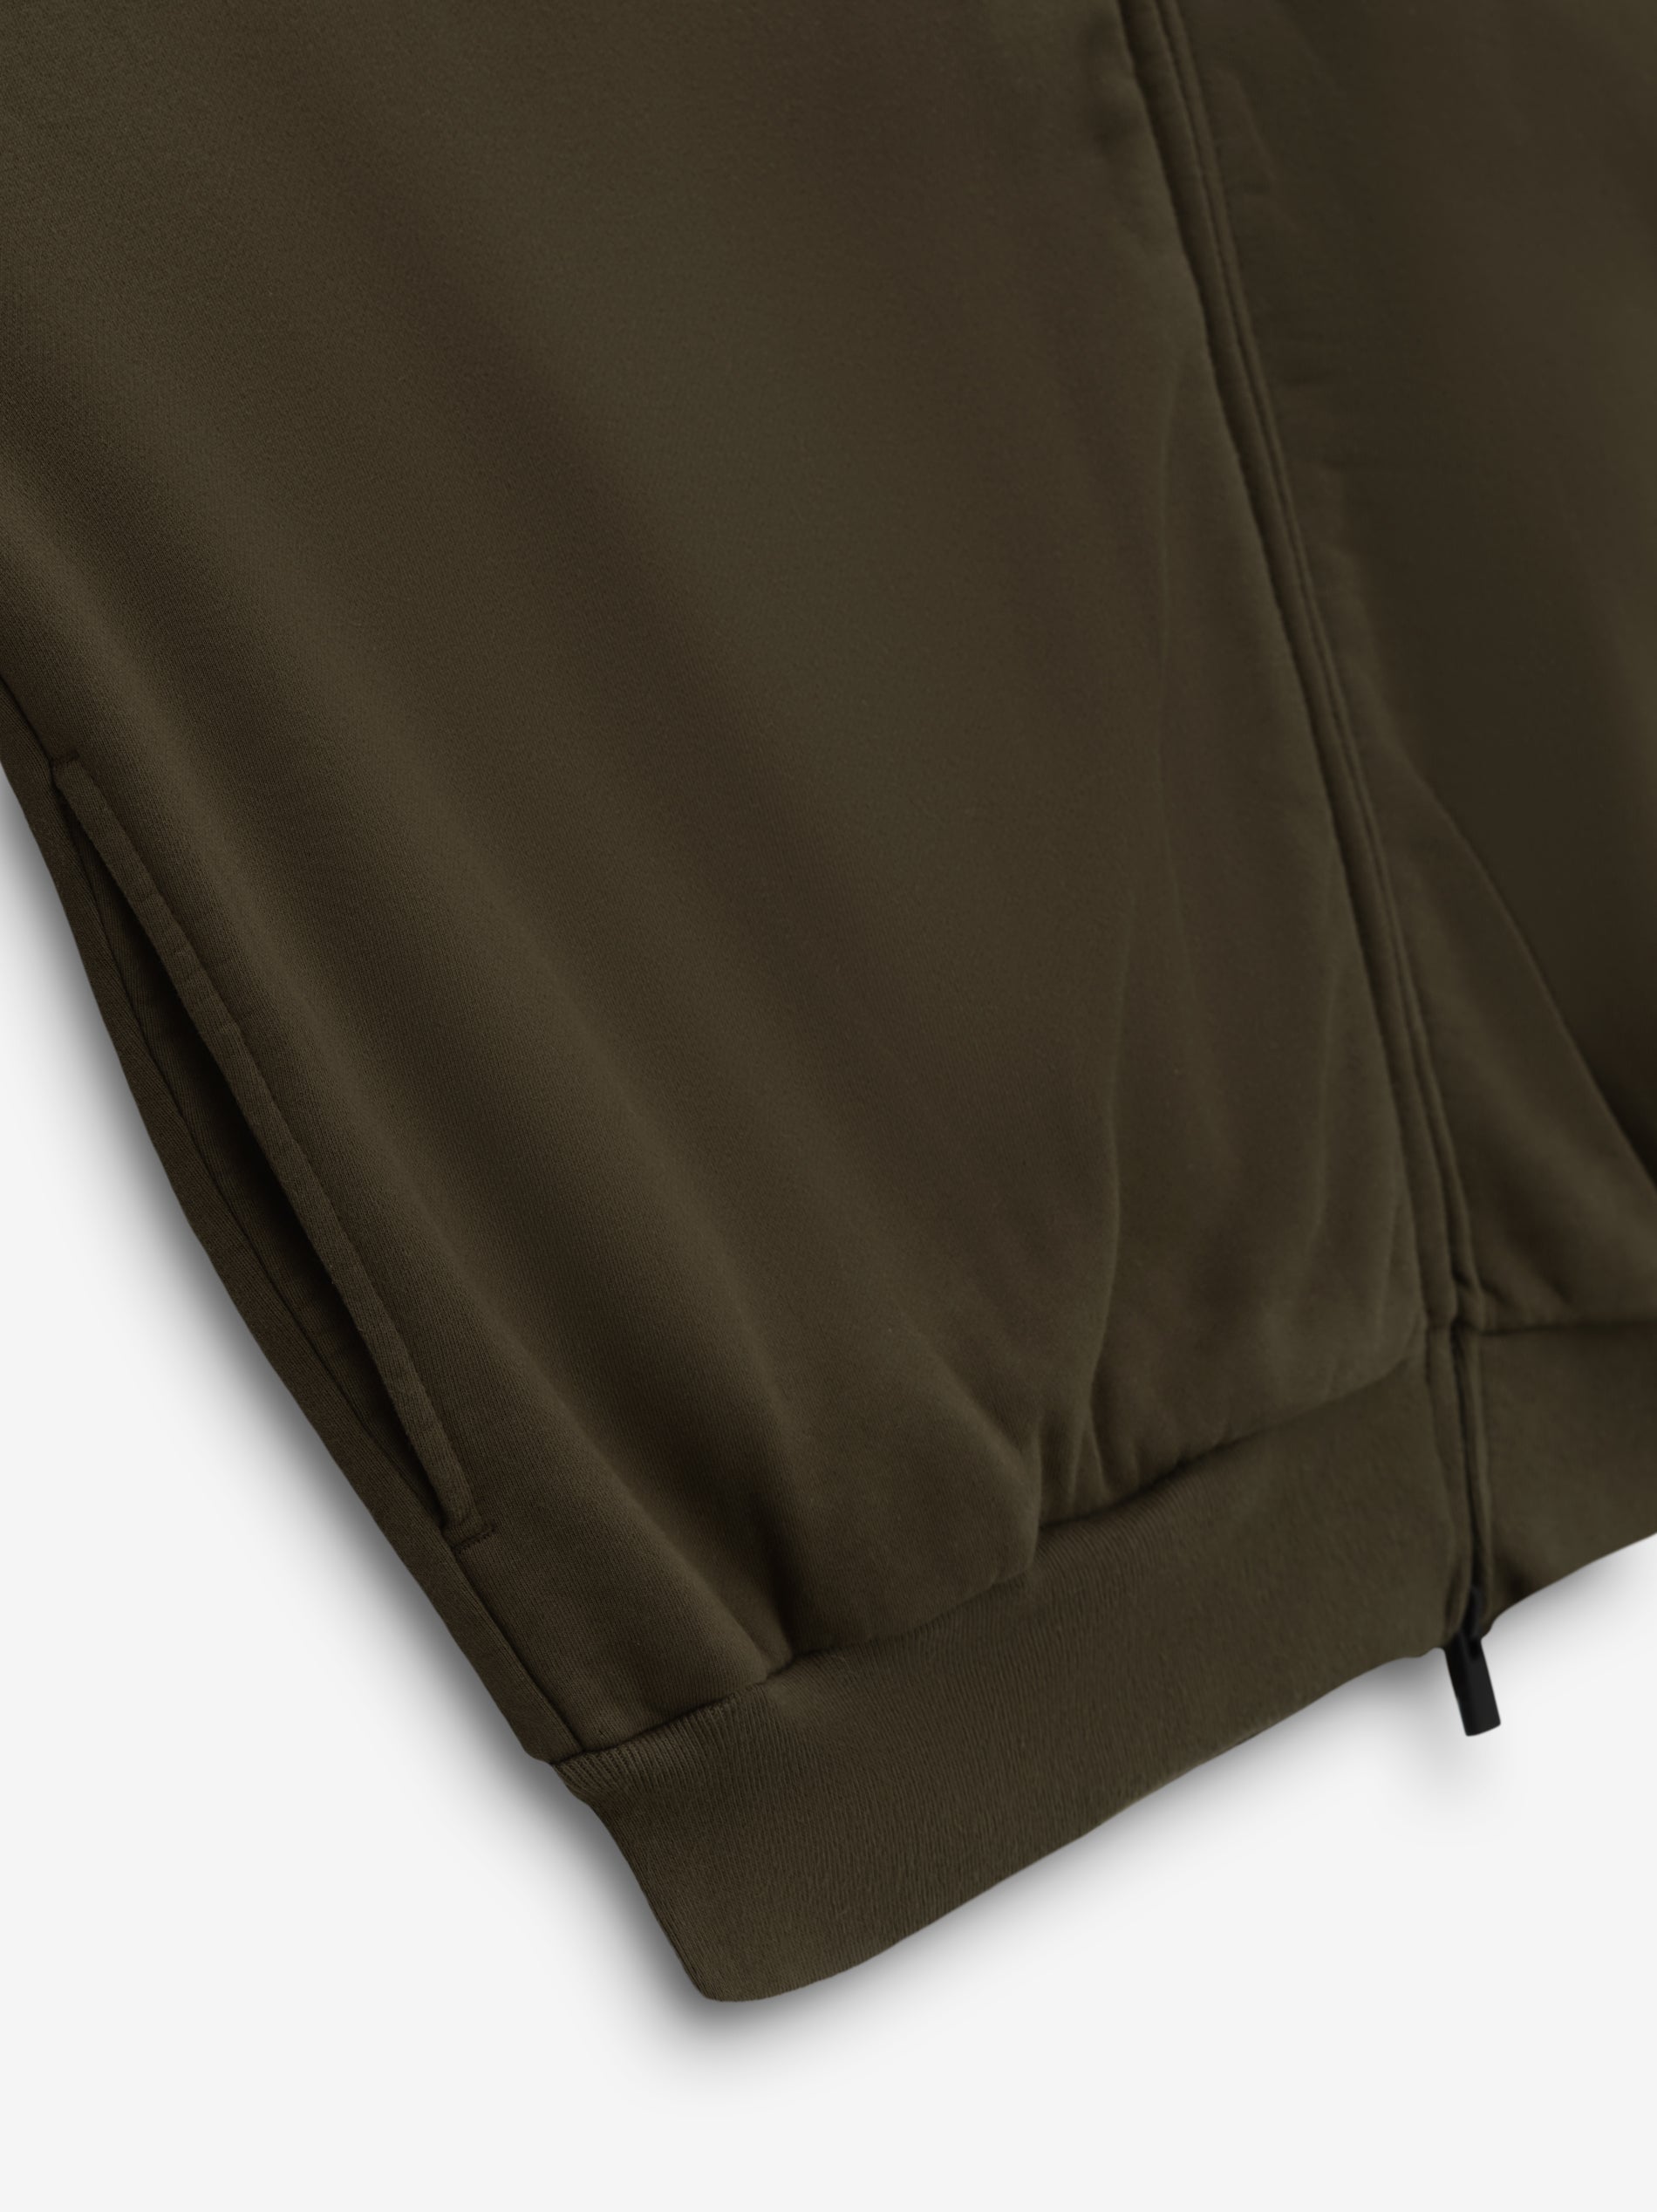 CPA 615-USFN Ultra Soft Fleece Full Zip Hooded Sweatshirt